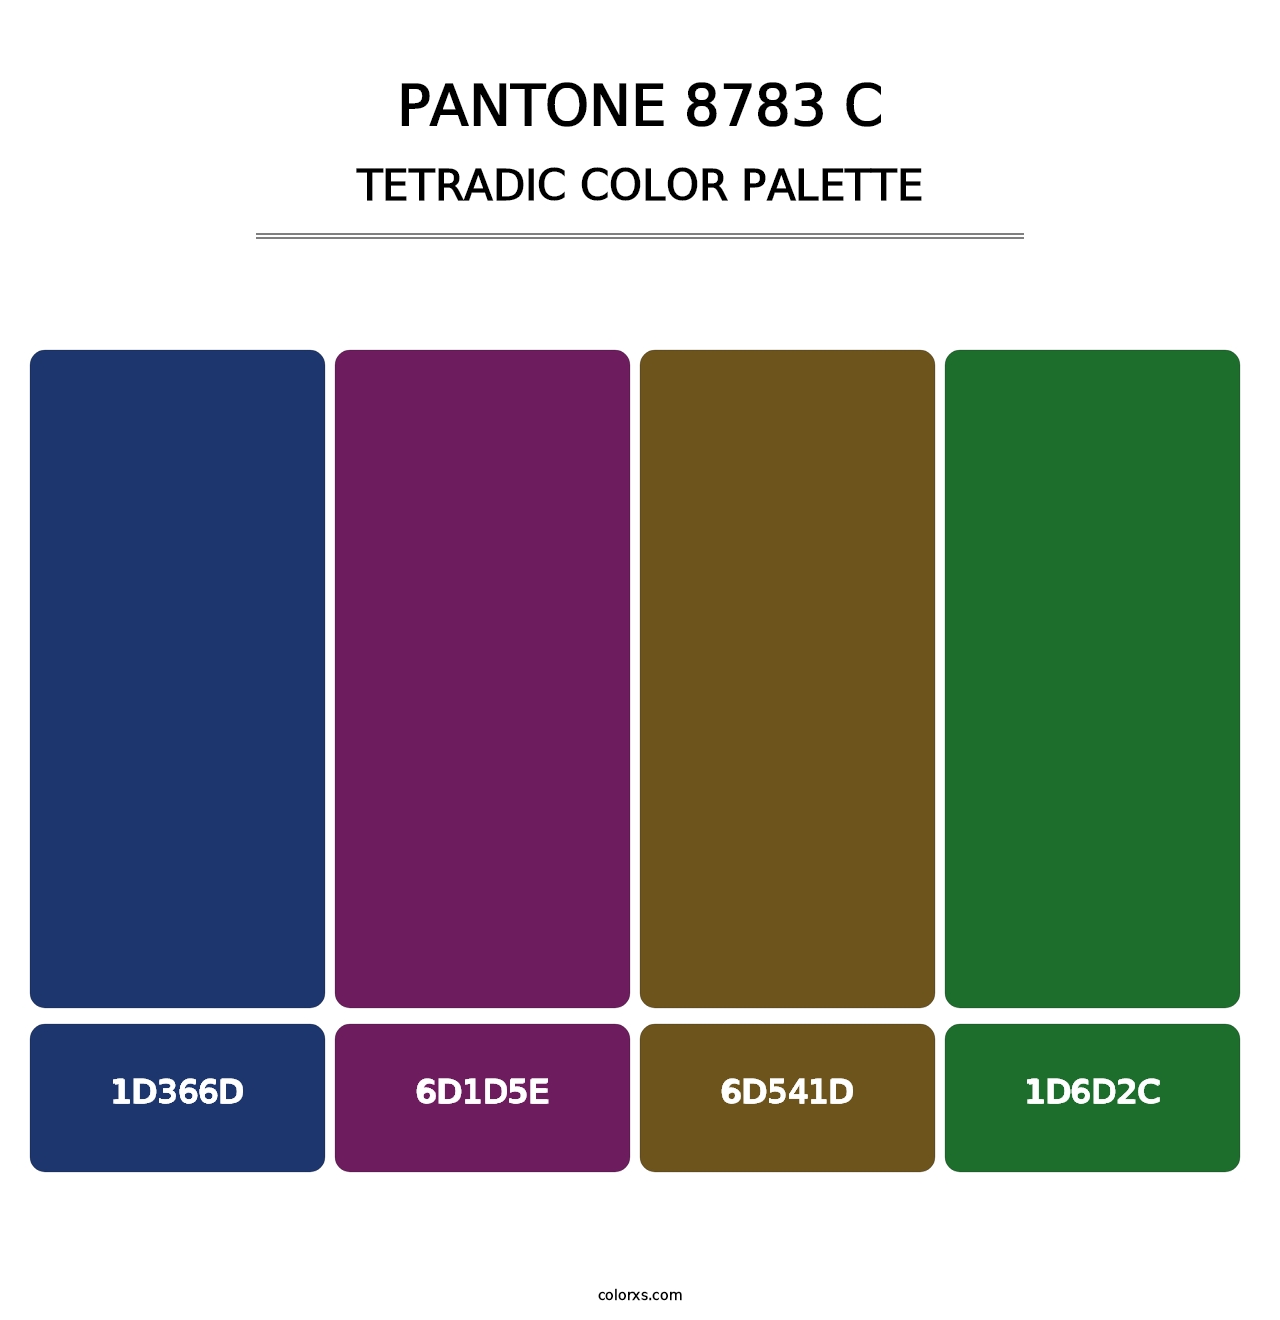 PANTONE 8783 C - Tetradic Color Palette